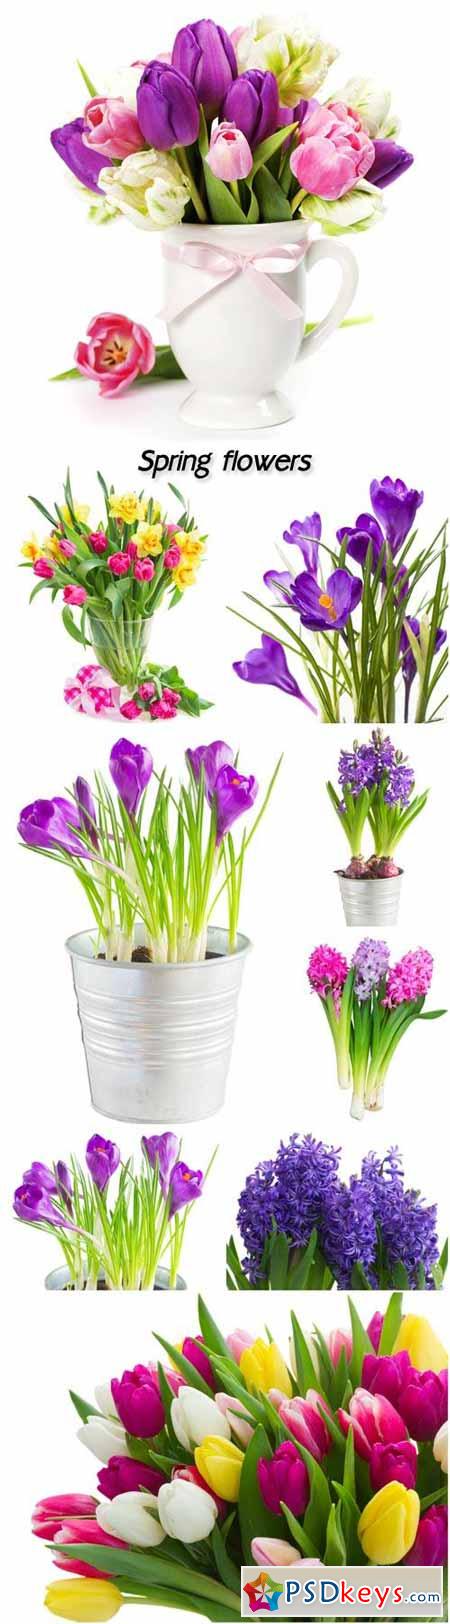 Spring flowers, hyacinths, crocuses and tulips